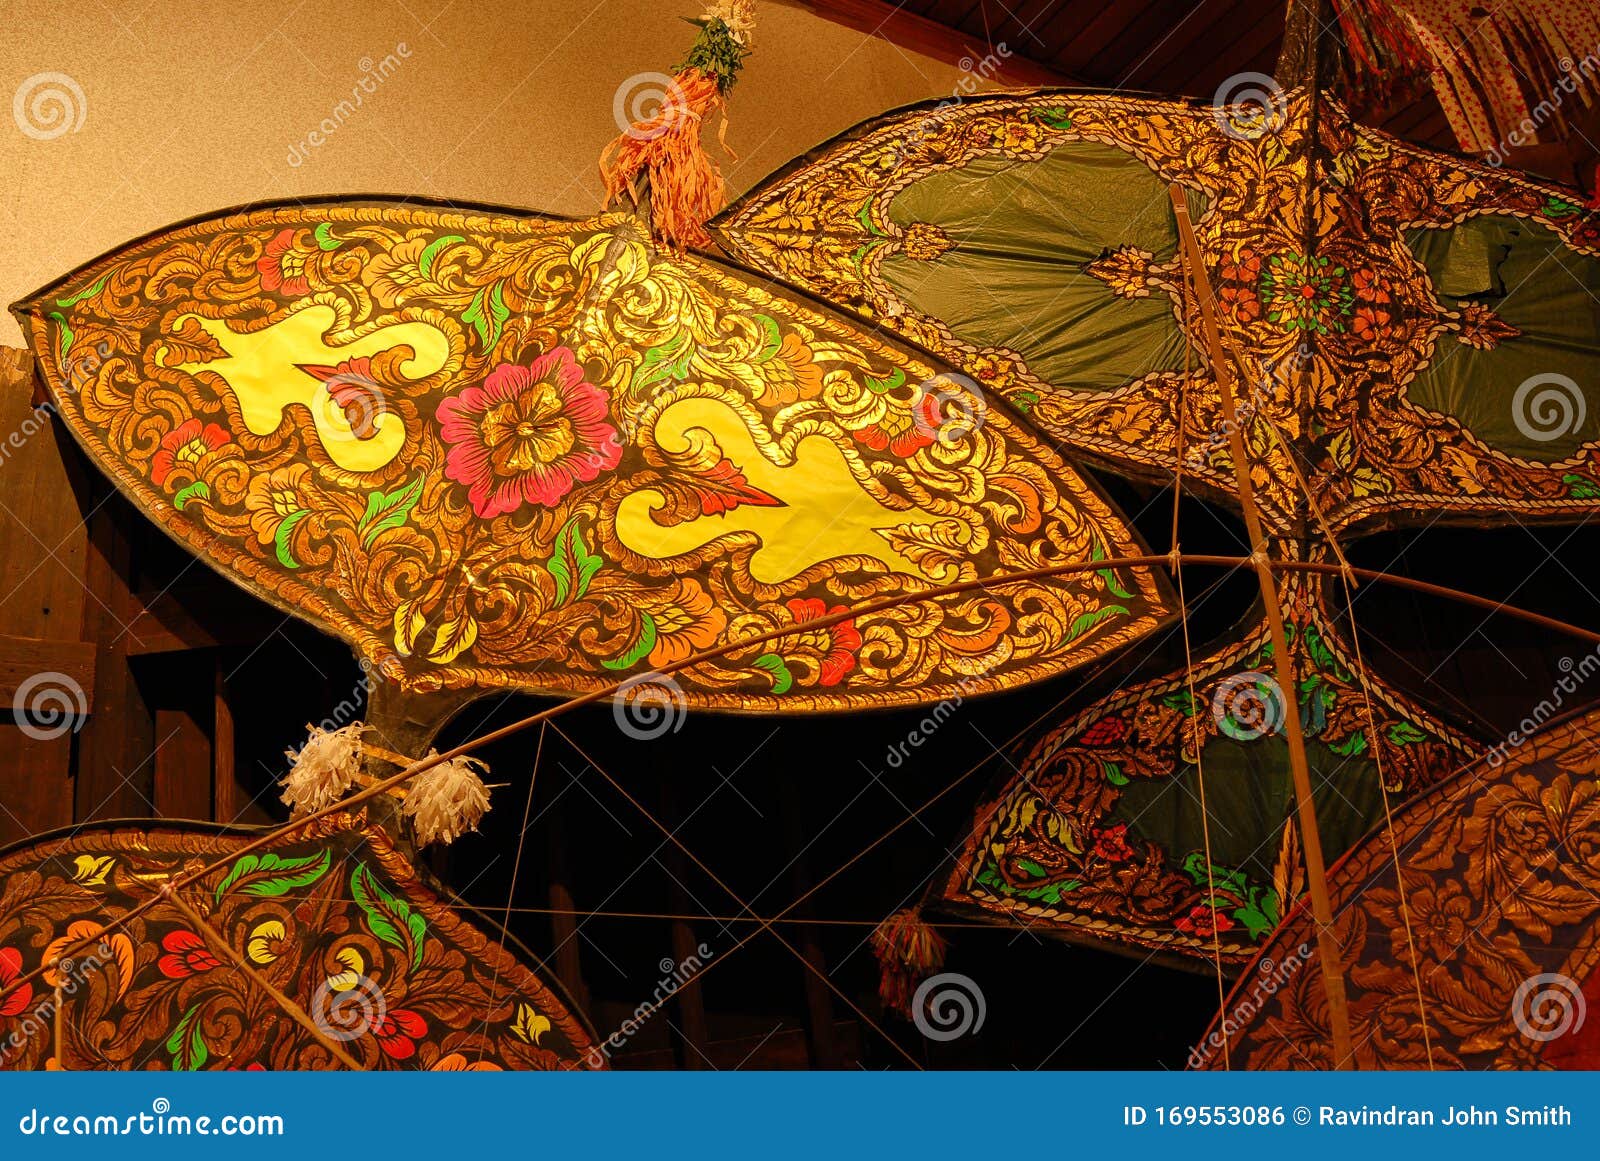 Wau bulan stock photo. Image of craft, traditional, famous - 169553086